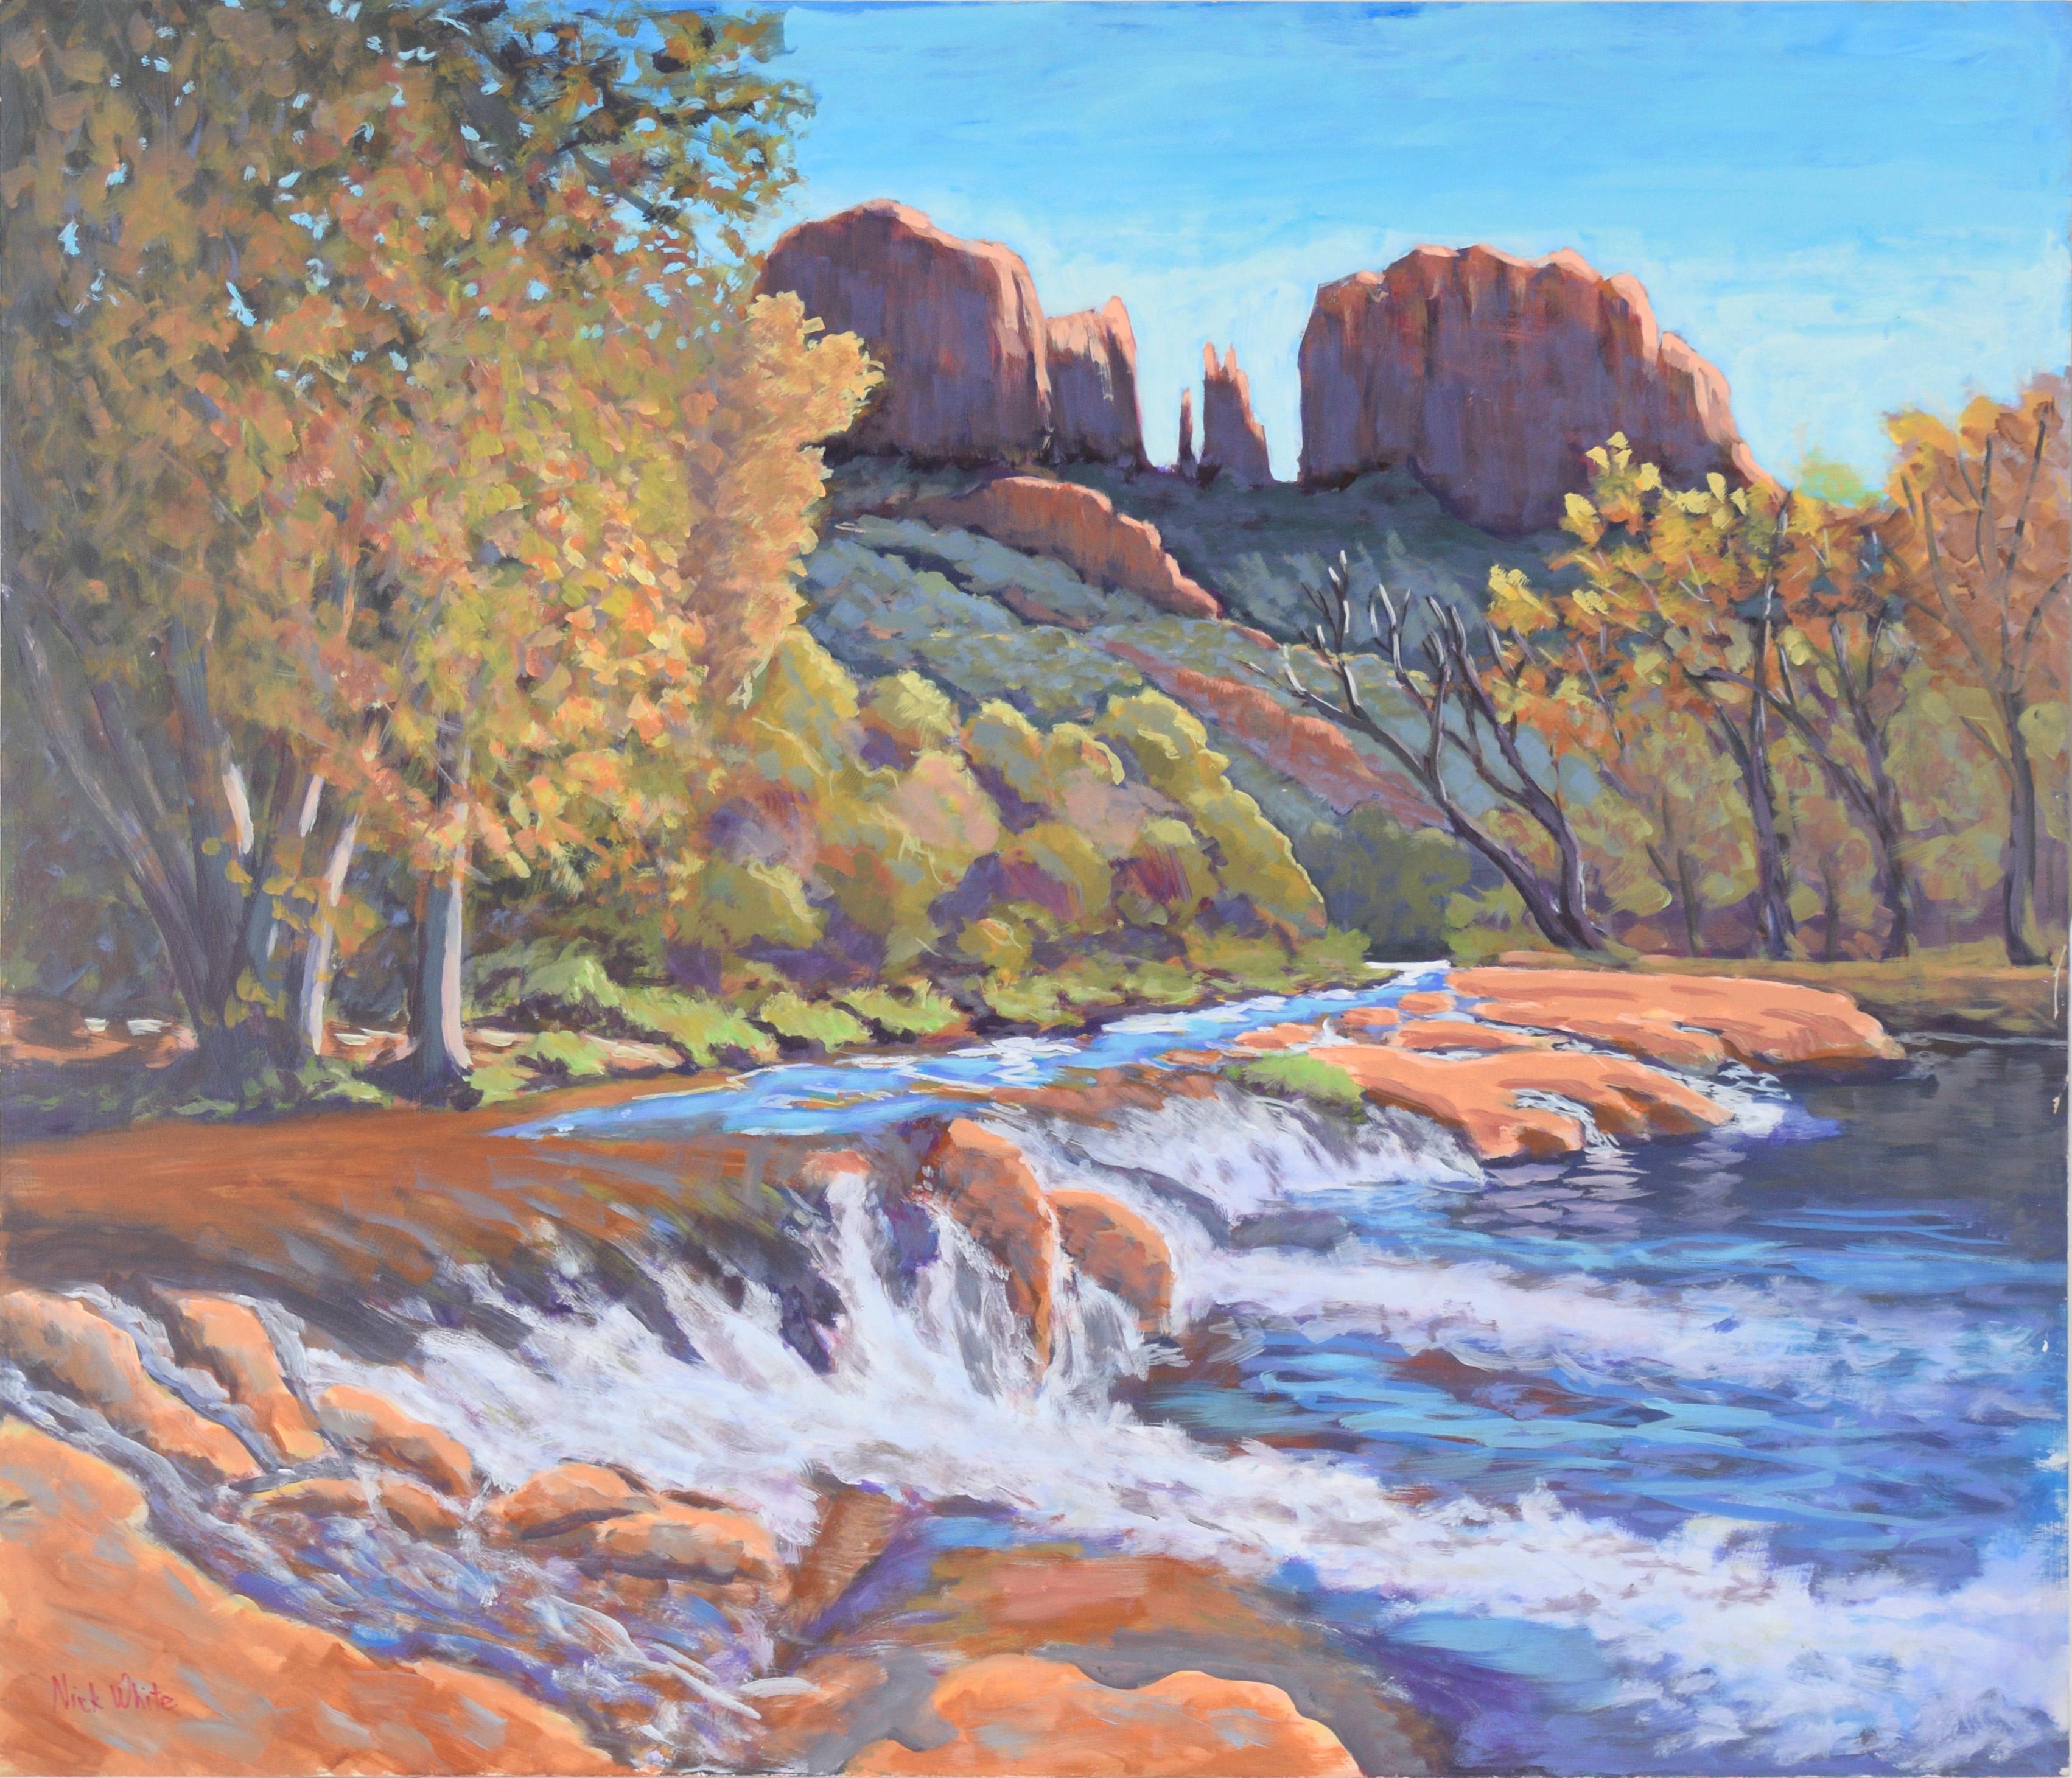 River in the Desert - Western Plein Aire Landscape in Acrylic on Board